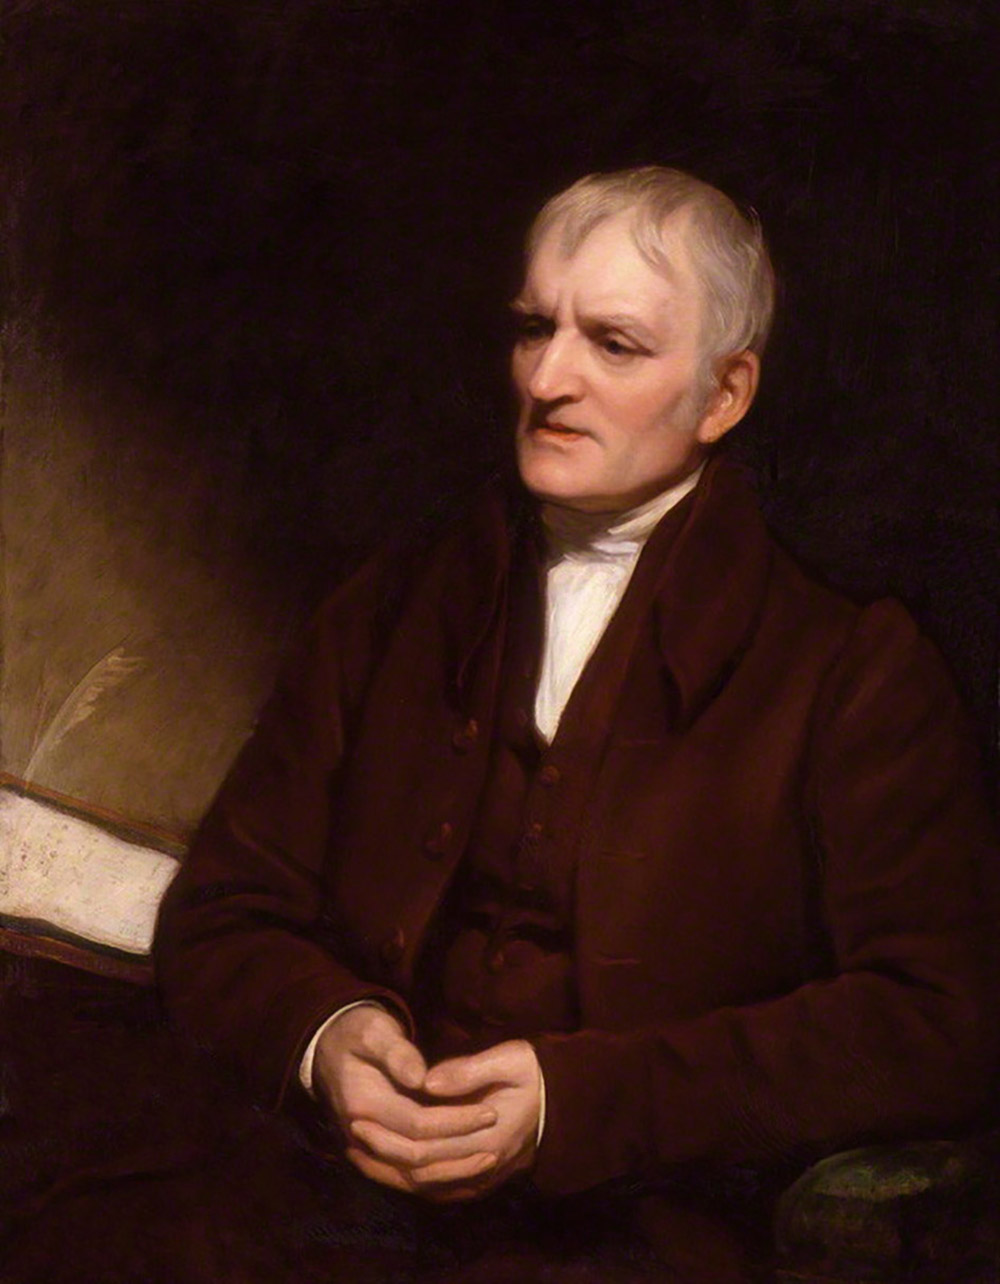 John_Dalton_by_Thomas_Phillips,_1835.jpg